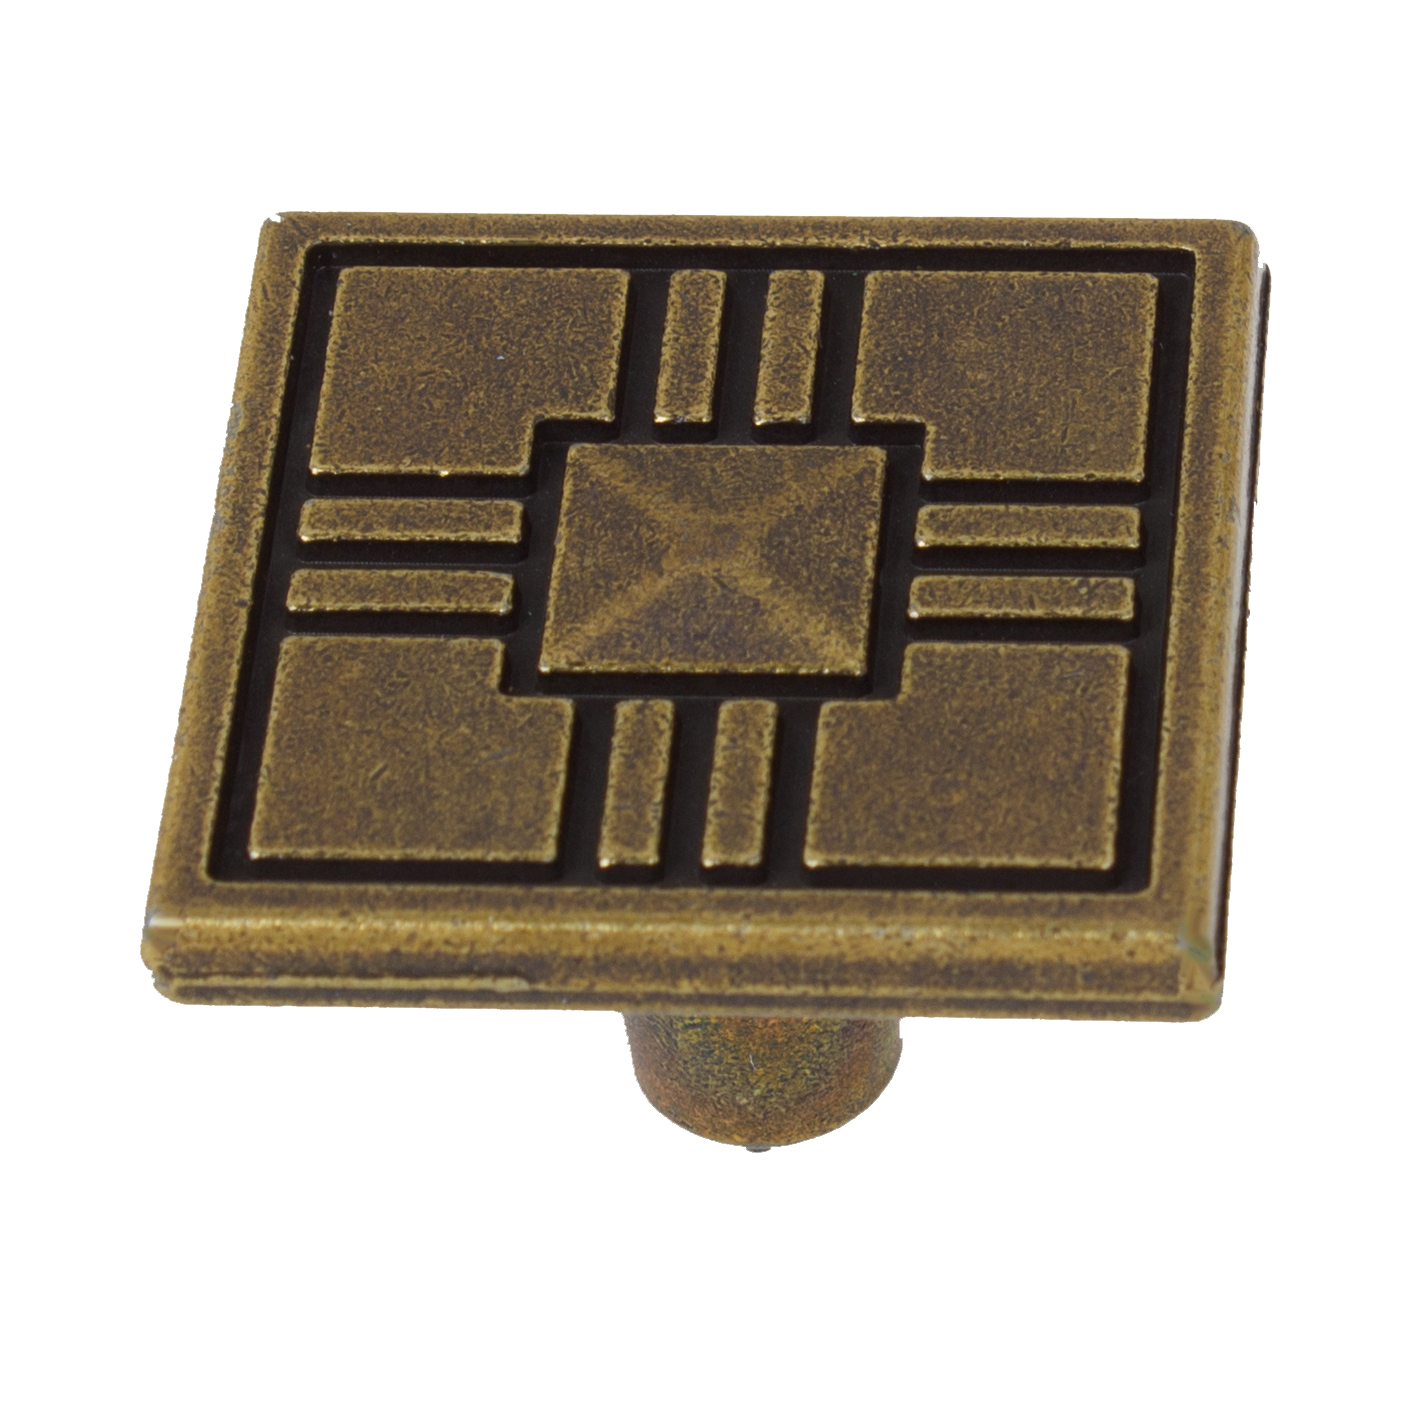 GlideRite 1-1/4 in. Square Deco Cabinet Knob, Antique Brass, Pack of 10 - image 1 of 4